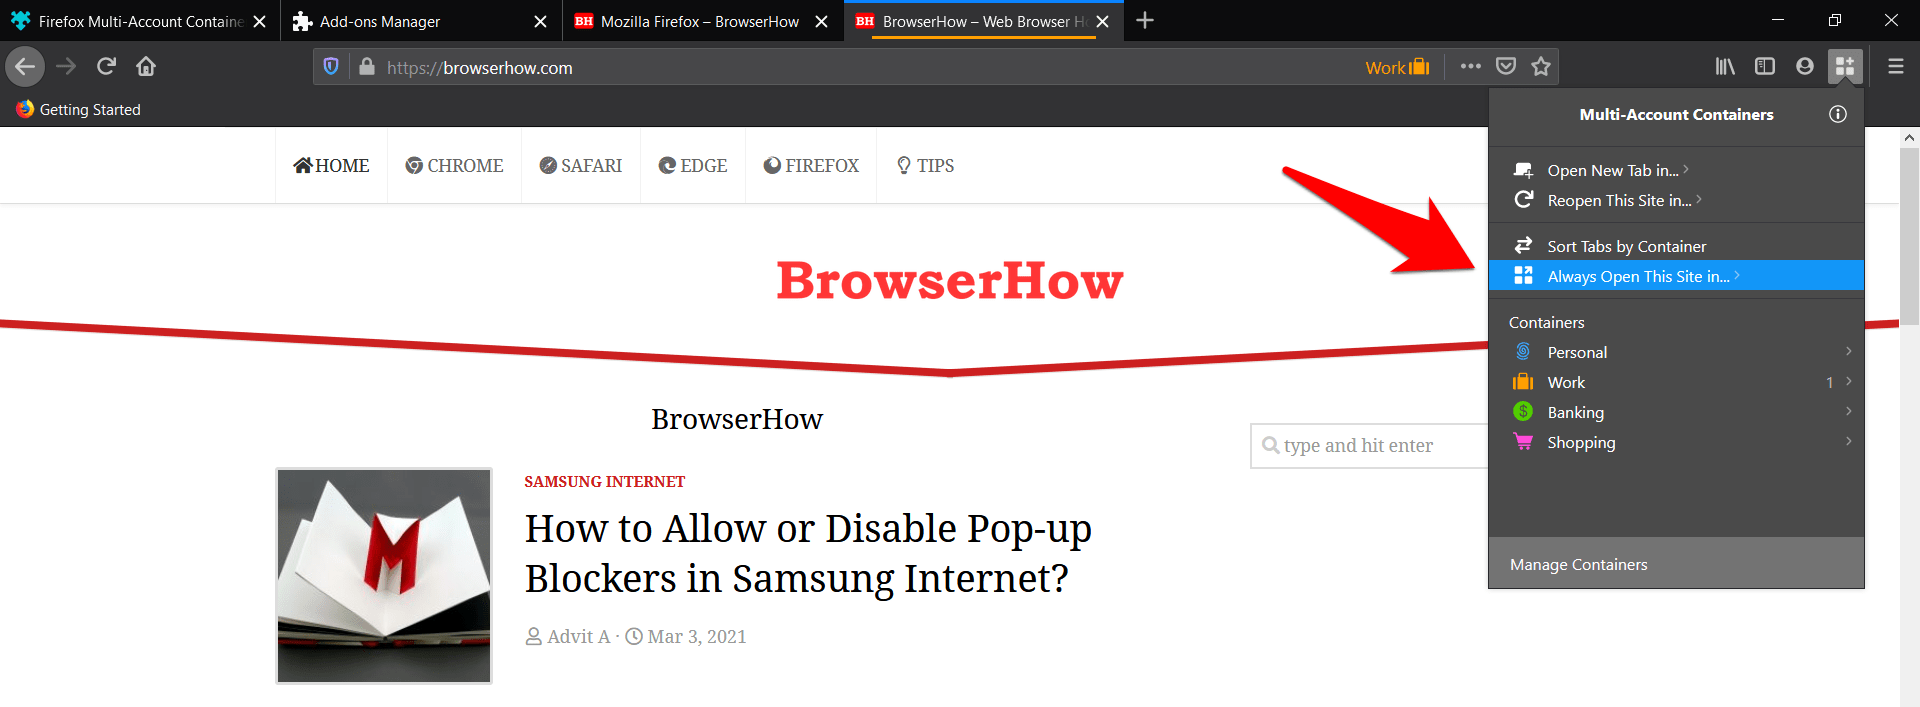 Siempre abra este sitio en contenedores Firefox